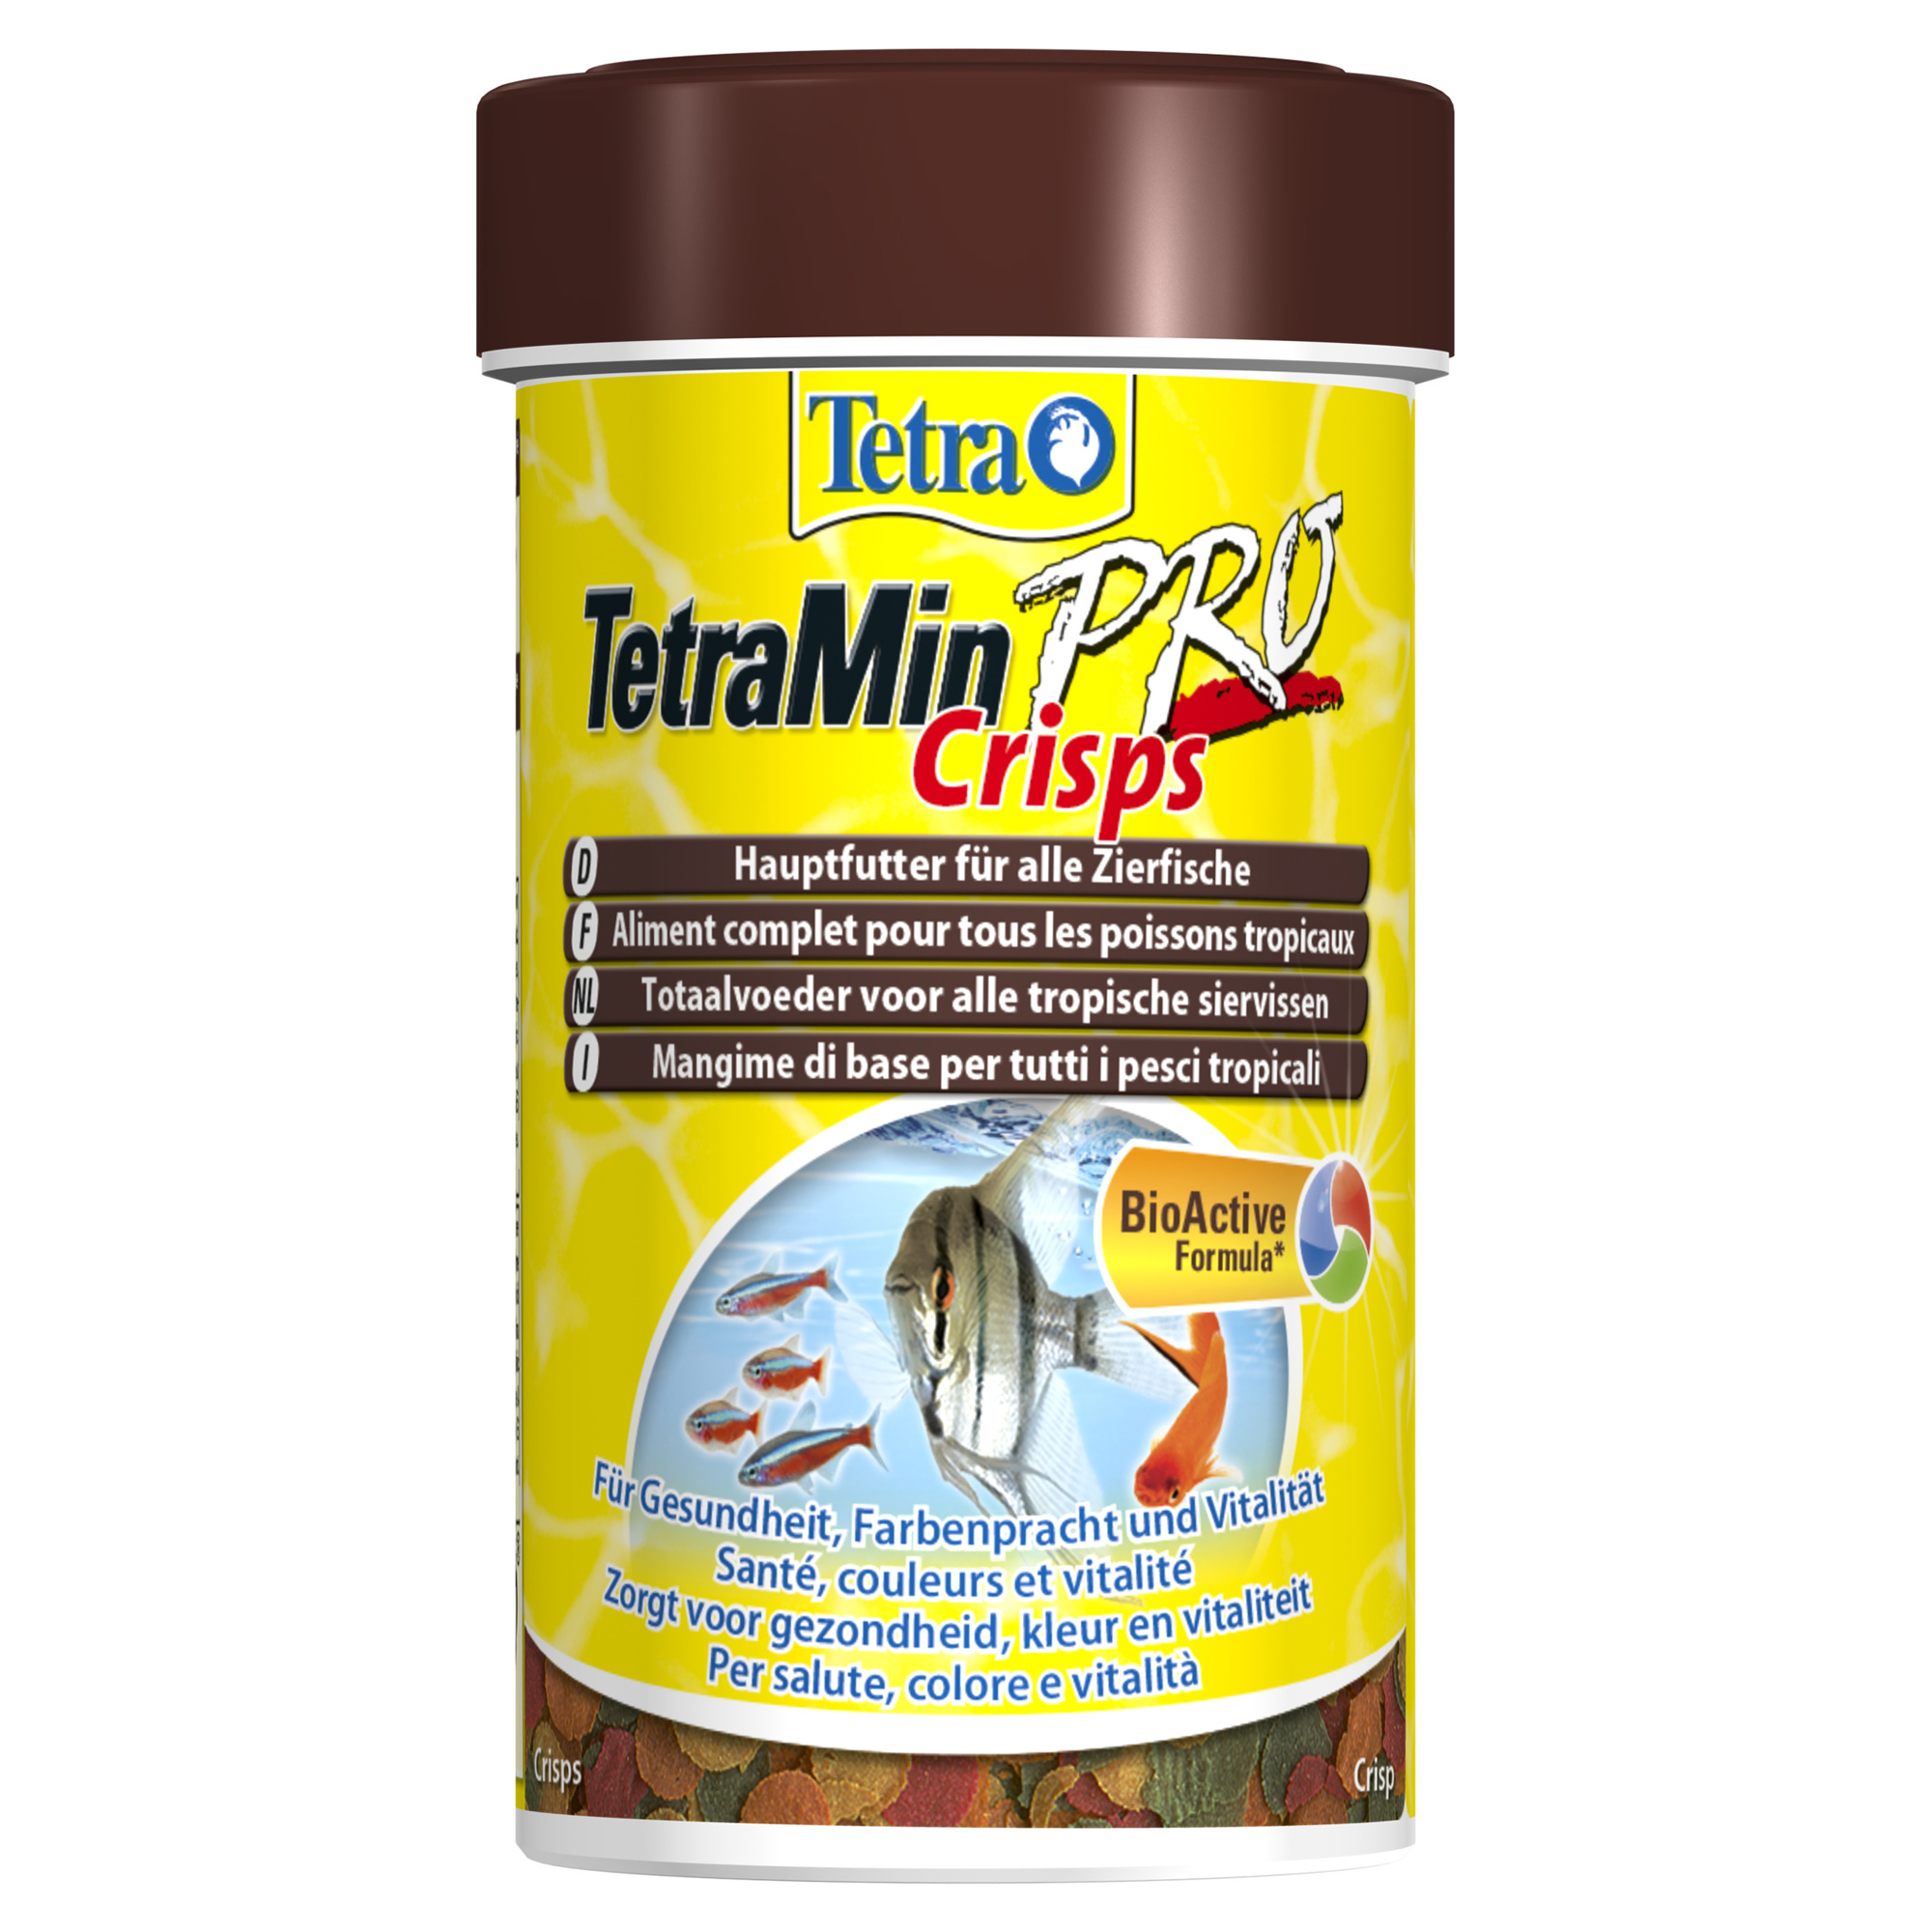 Fischfutter "Pro" TetraMin Crisps 22 g + product picture